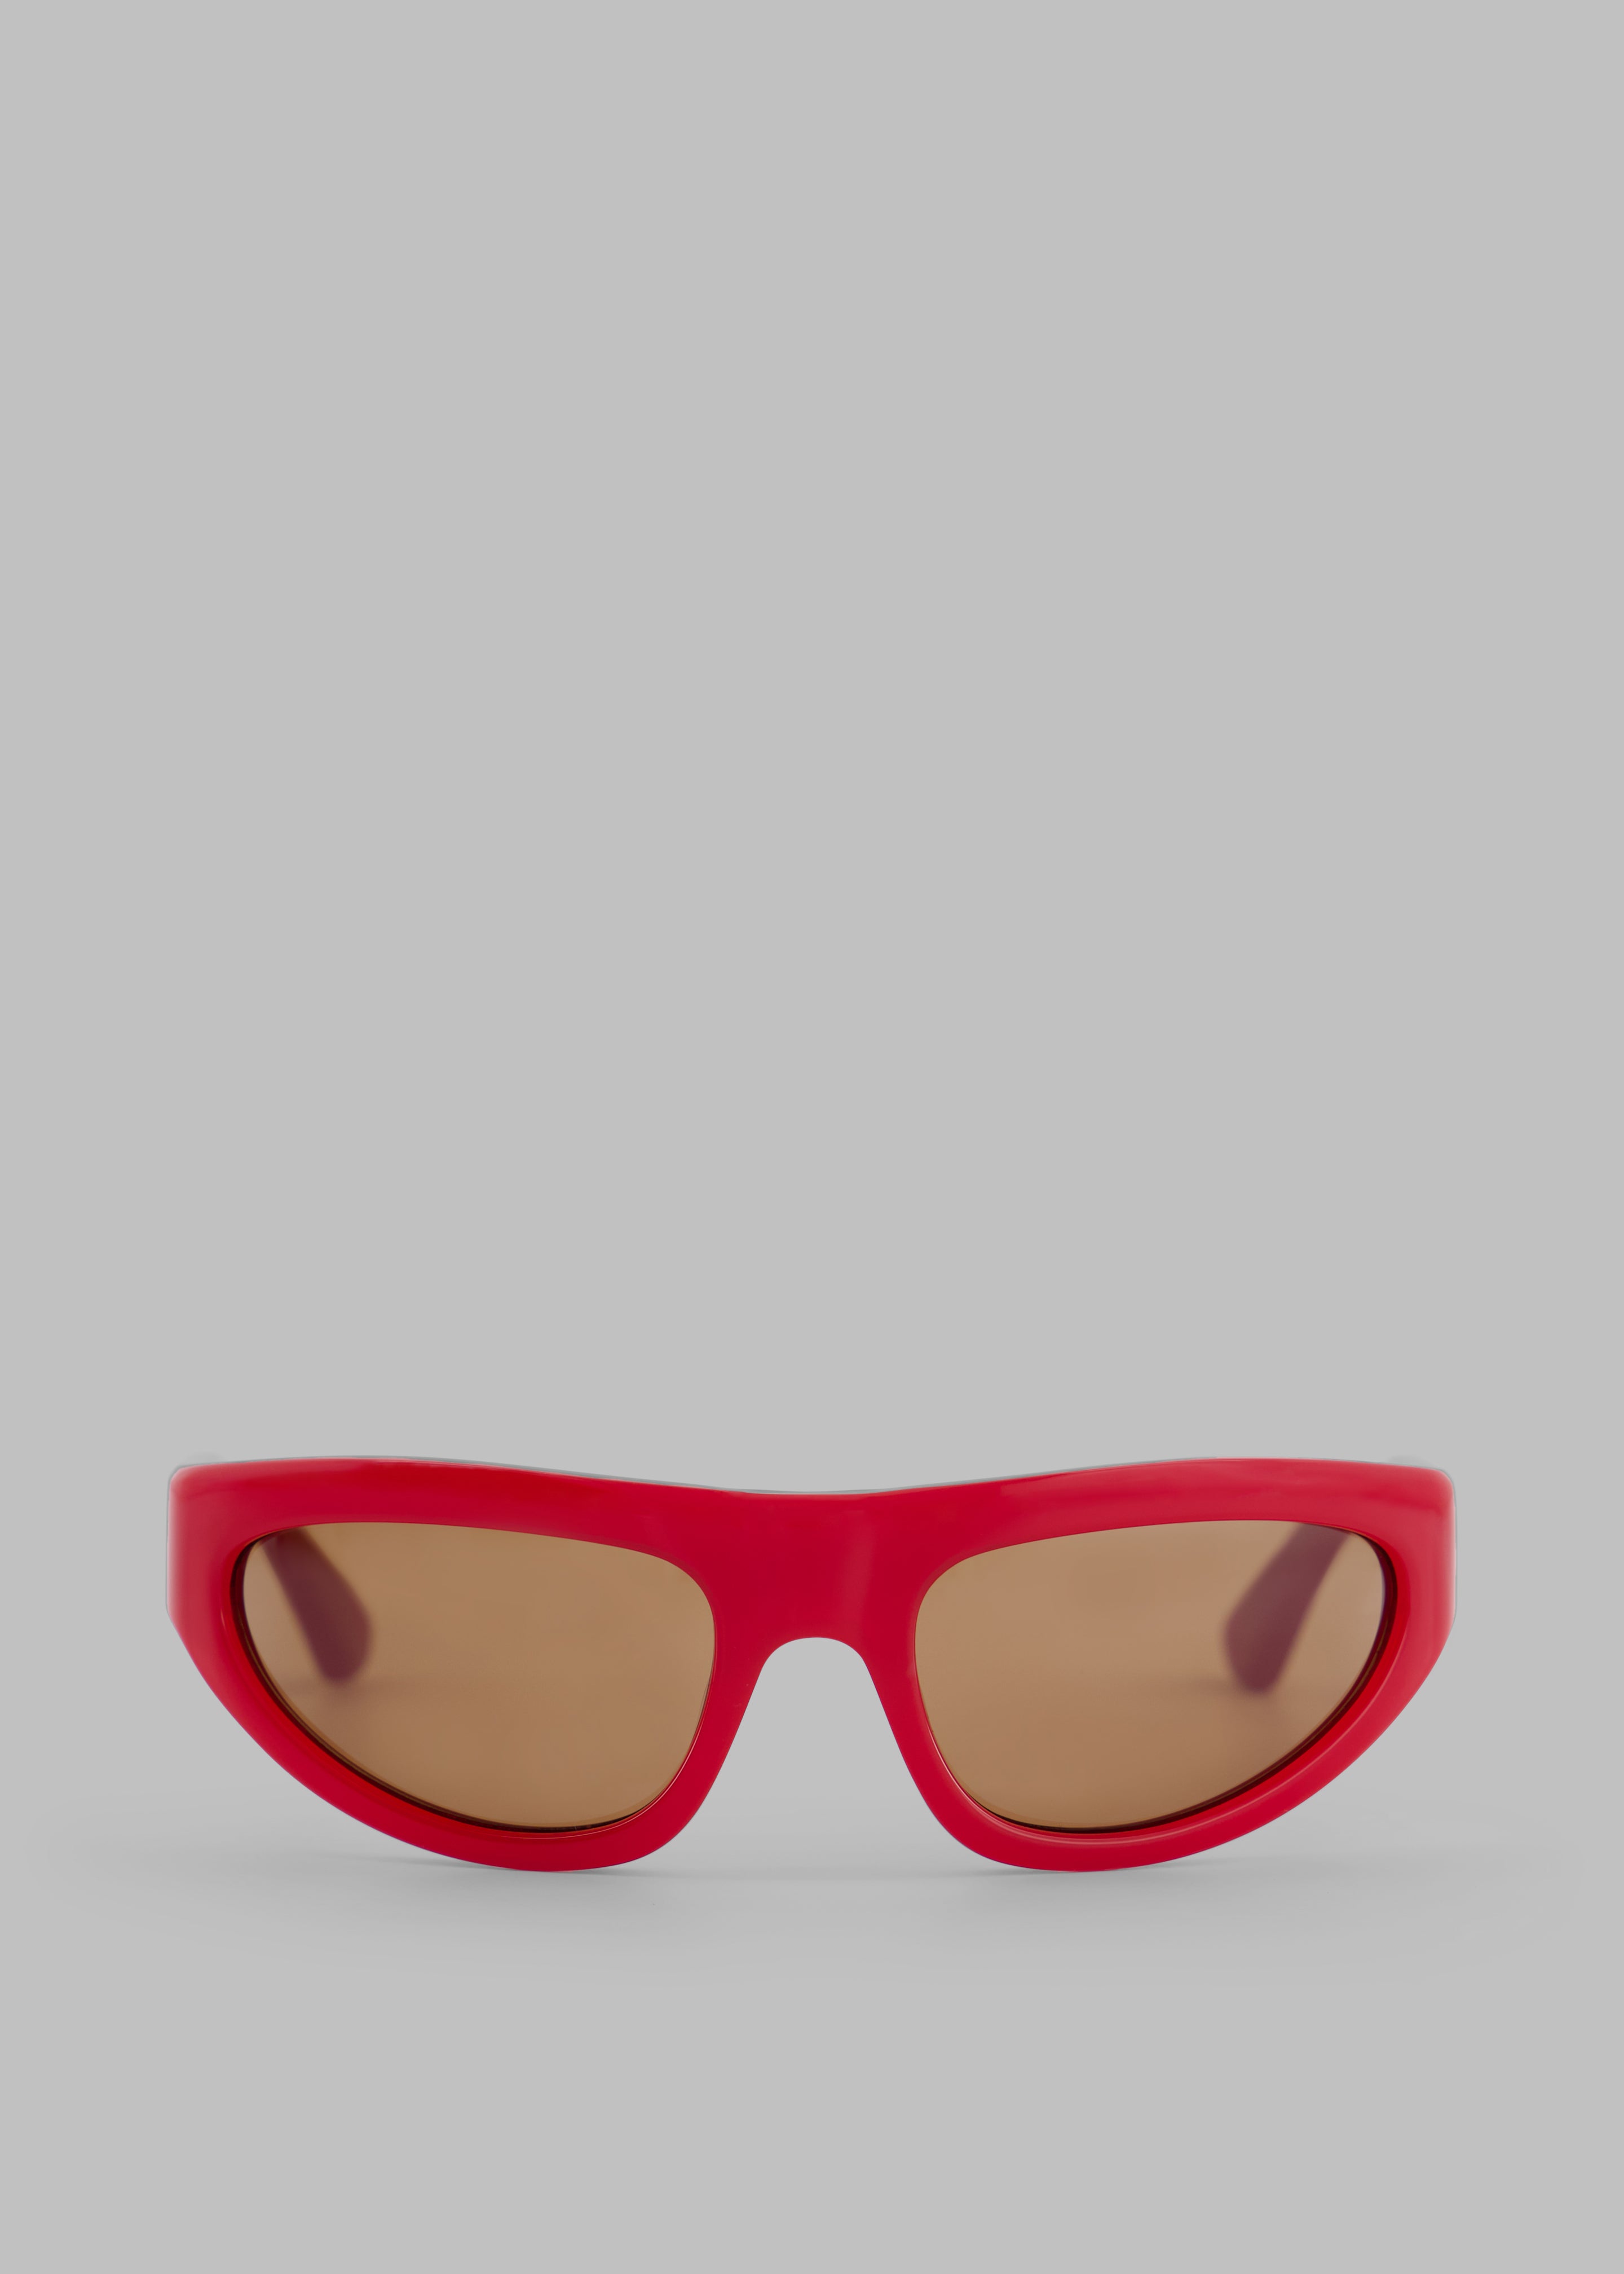 Port Tanger Malick Sunglasses - Incense Red Acetate/Tobacco Lens - 1